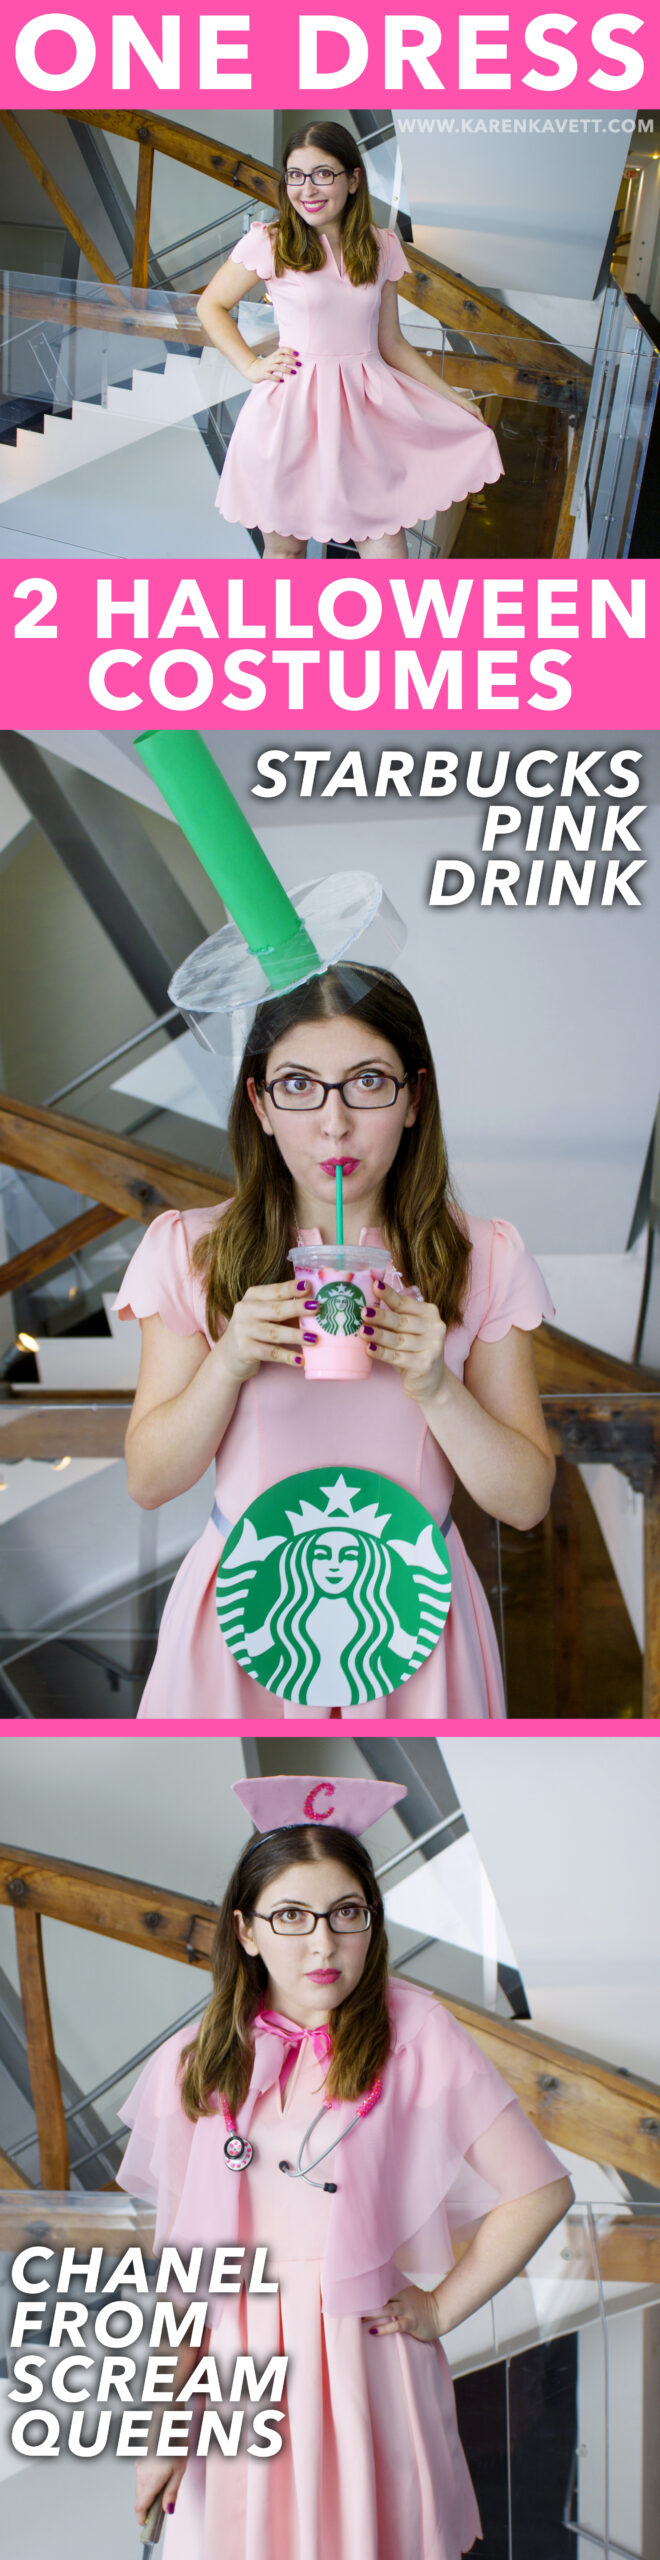 DIY Starbucks Pink Drink & Chanel from Scream Queens Costumes